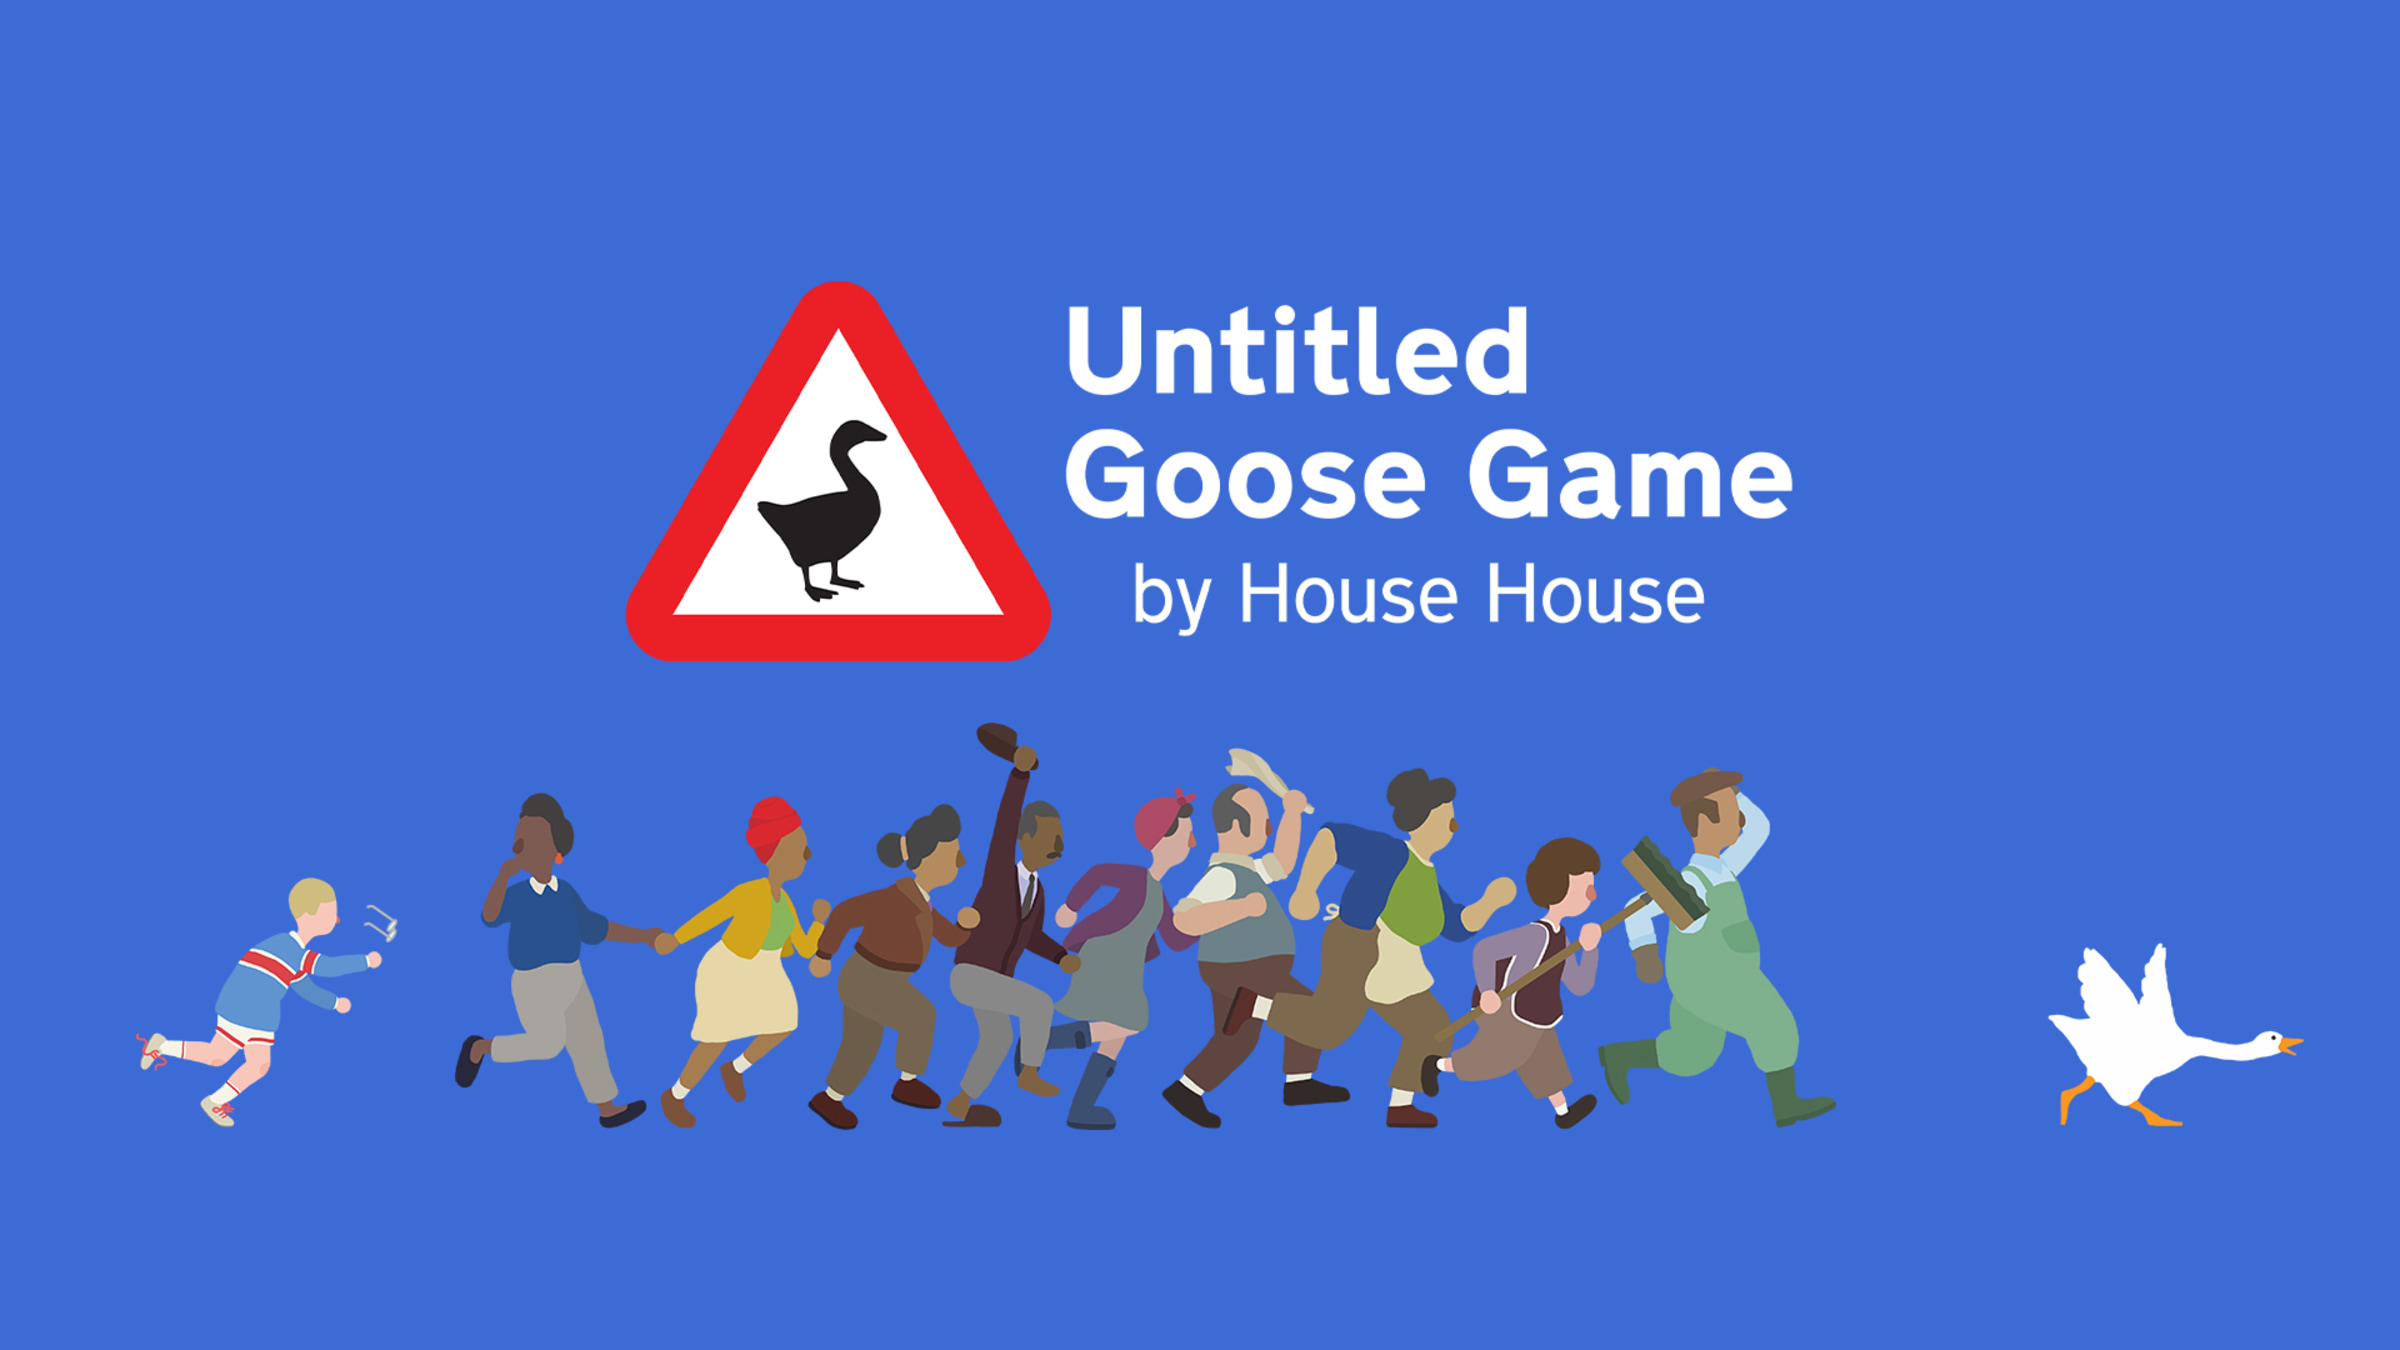 Unaltd Goose Game